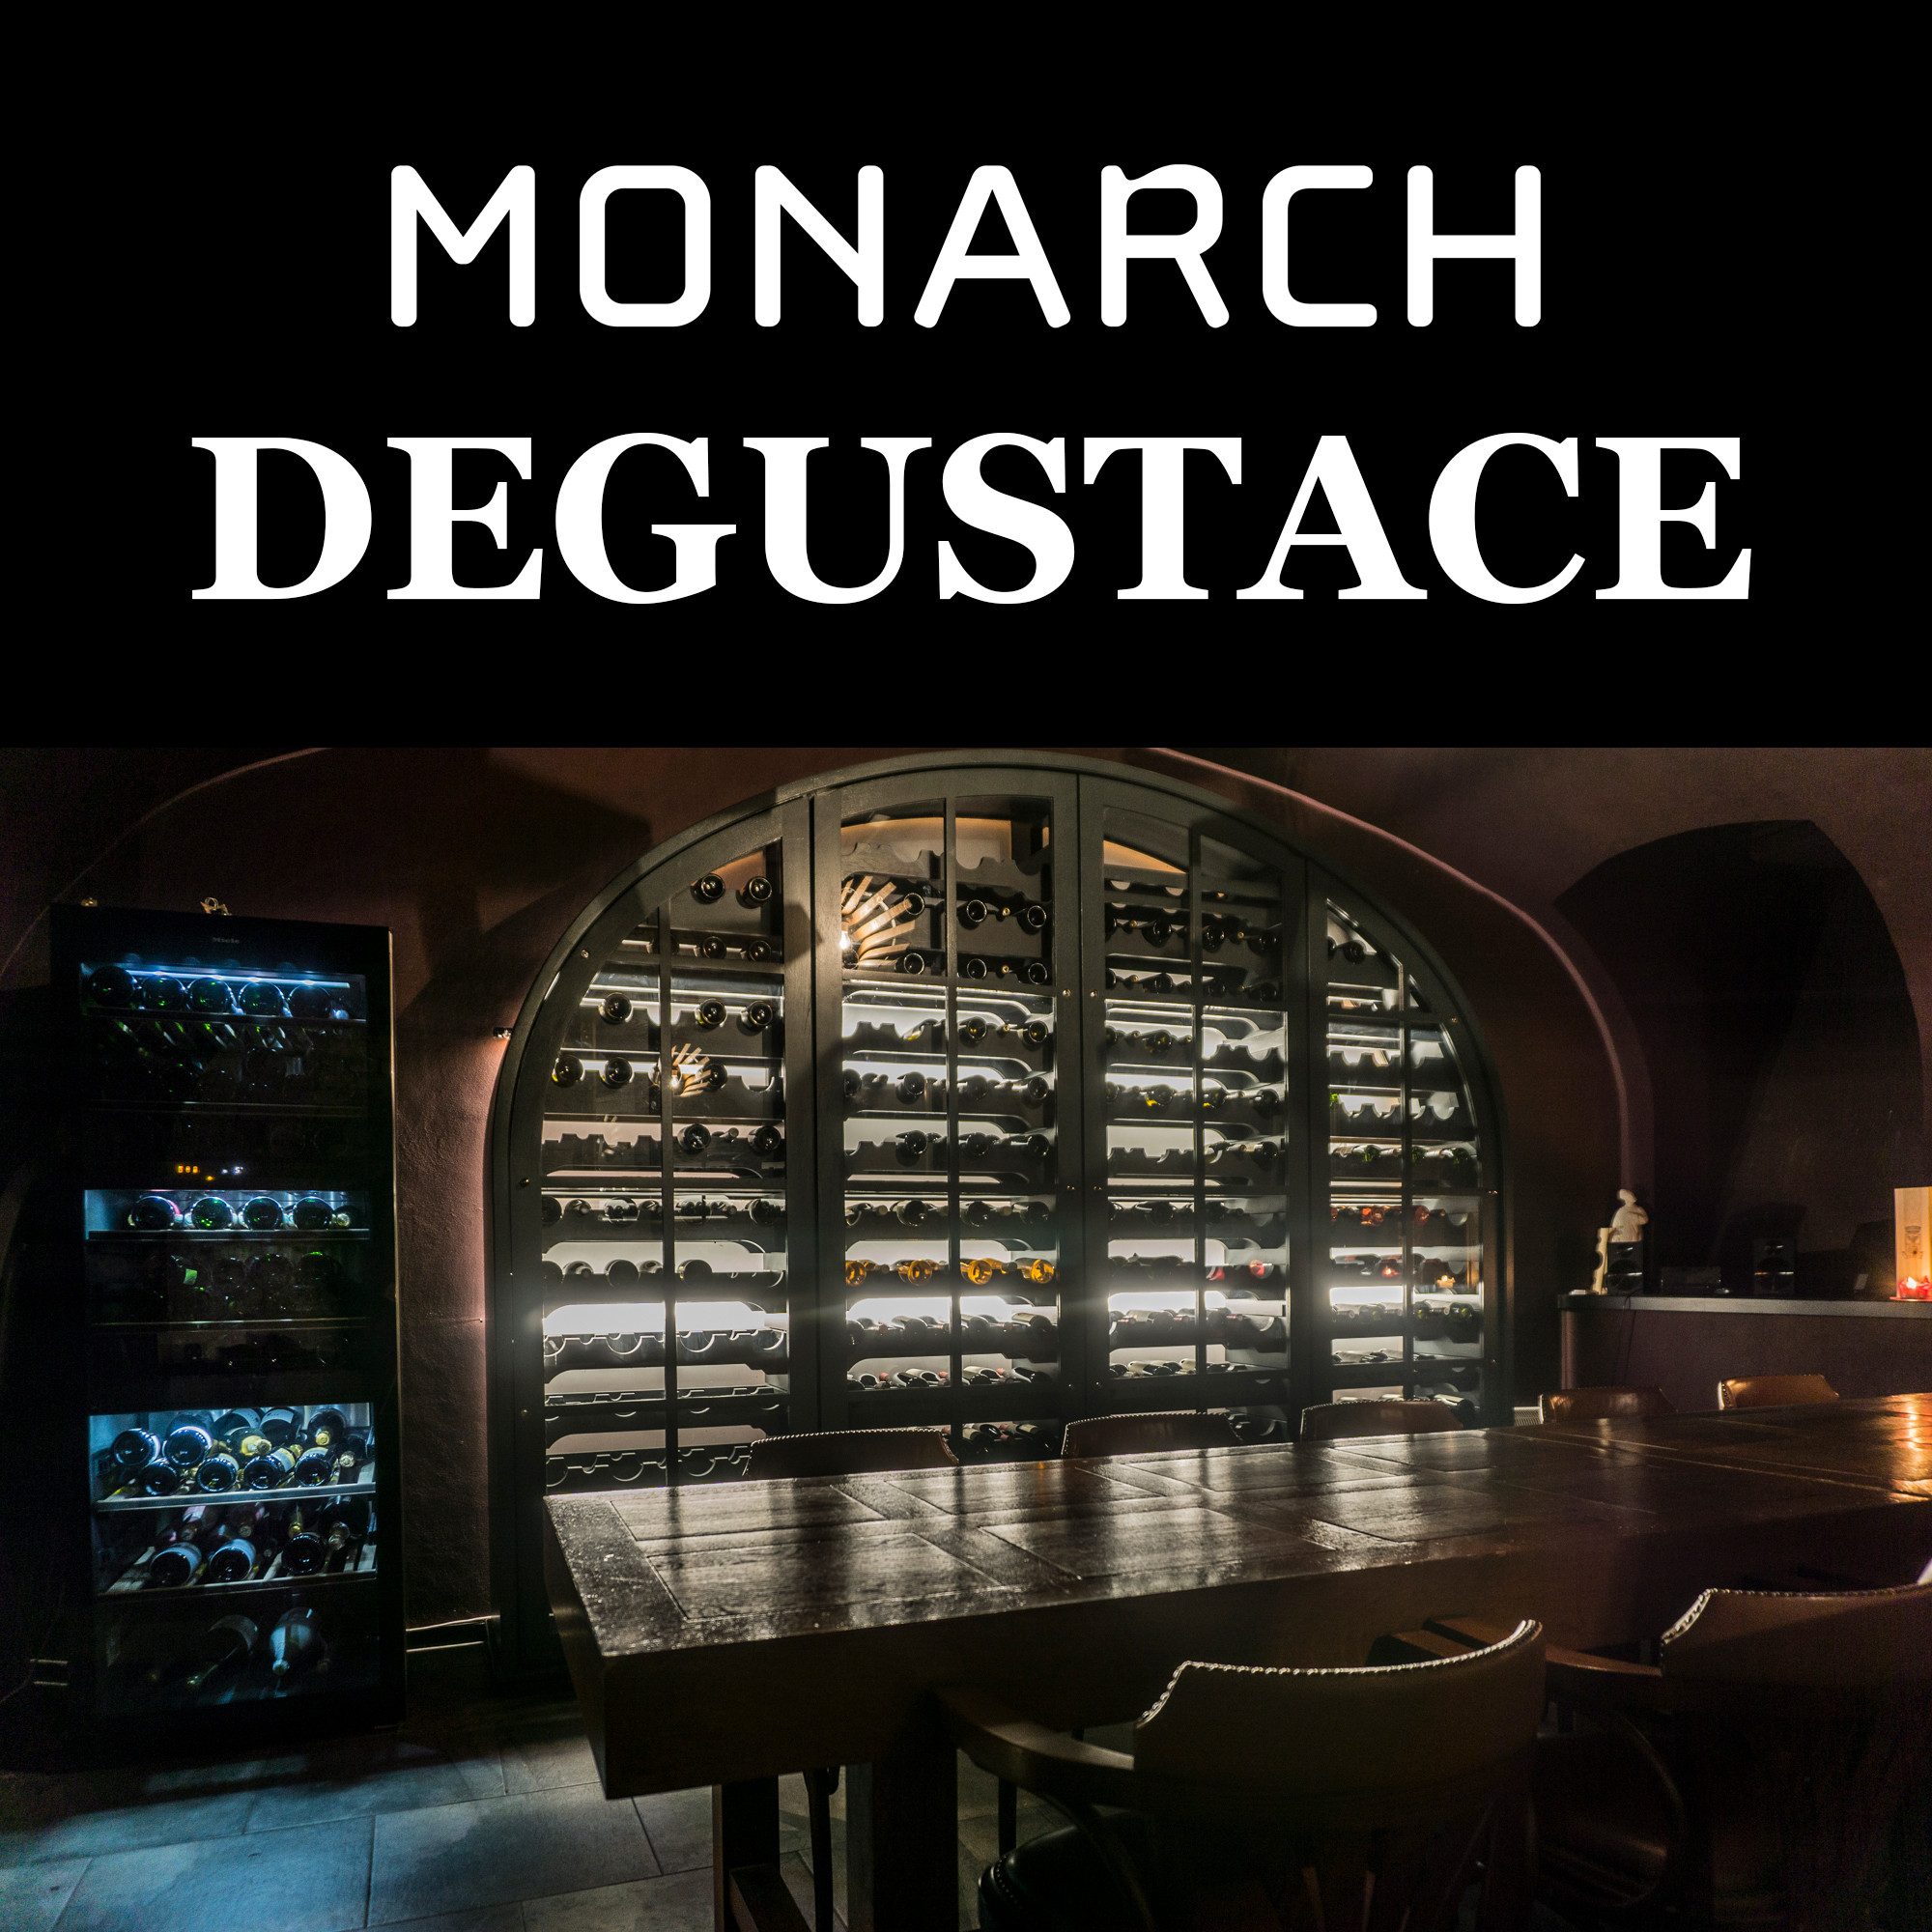 Degustace v restauraci Monarch